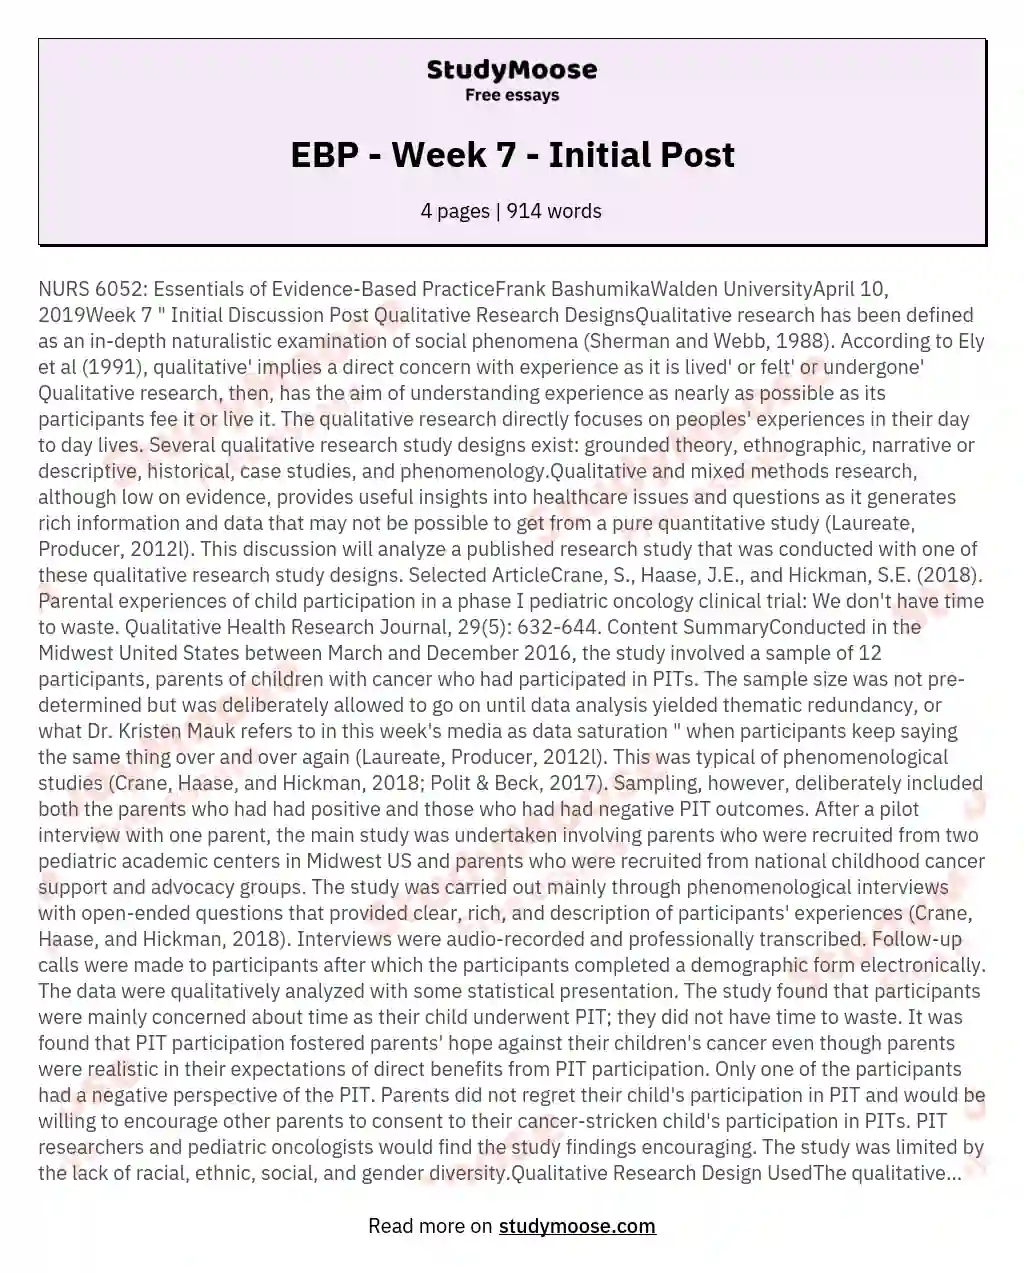 EBP - Week 7 - Initial Post essay